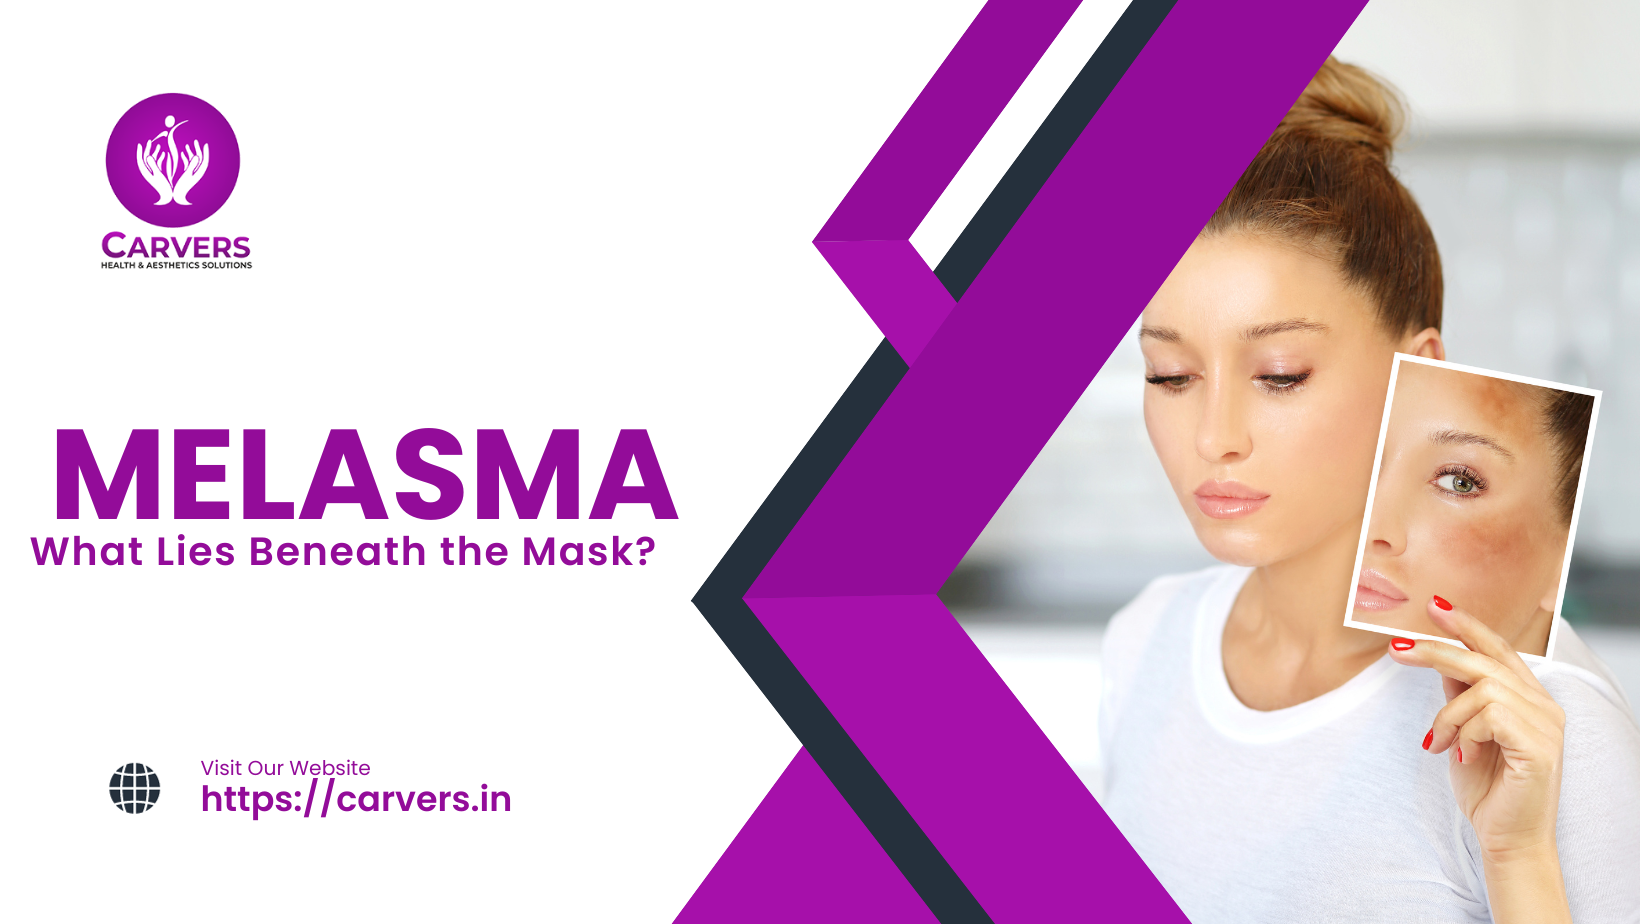 MELASMA: What Lies Beneath the Mask?